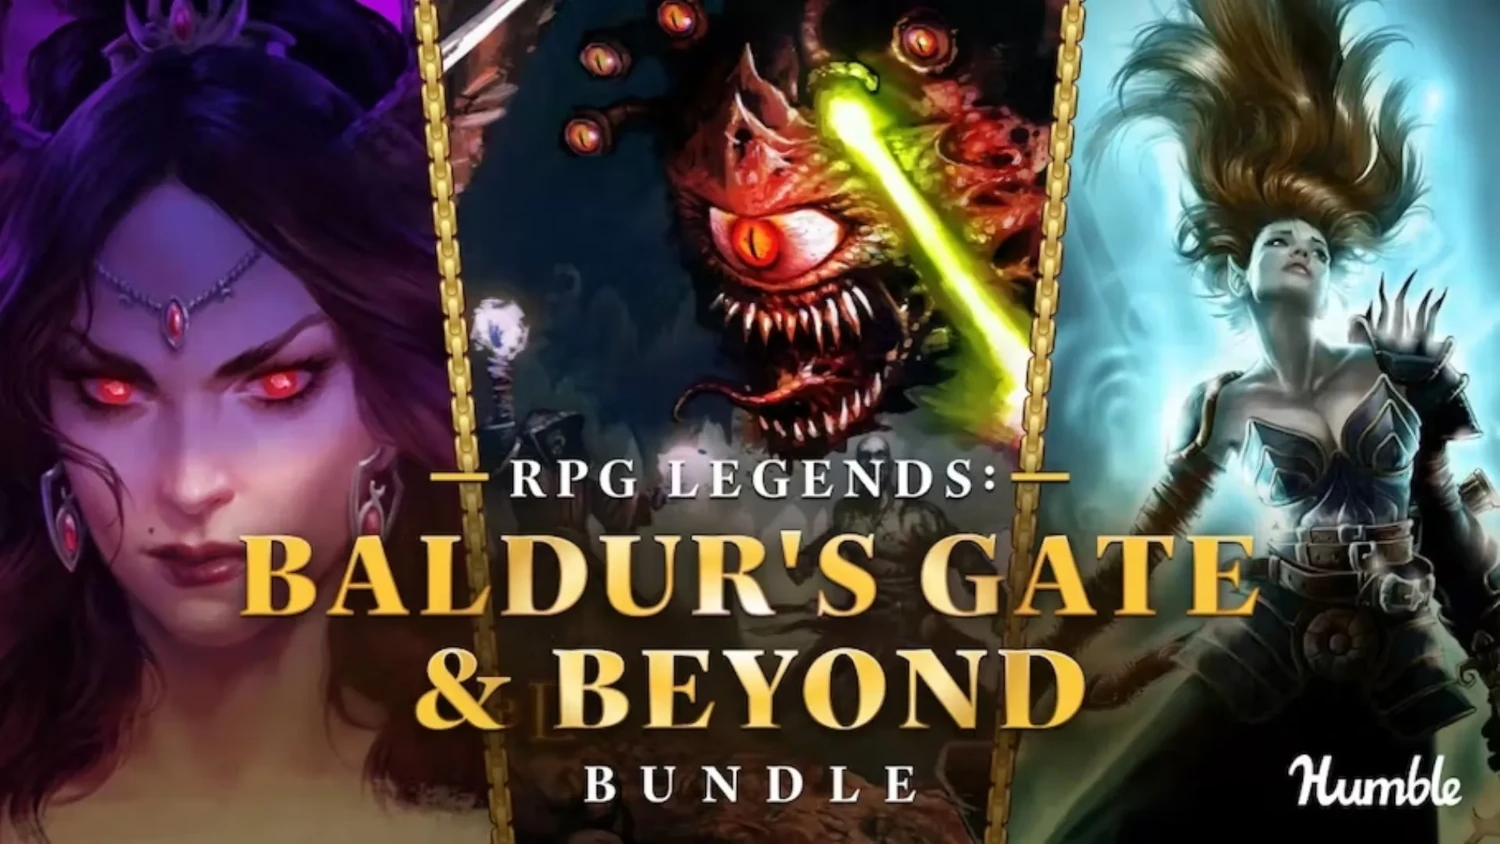 Pack Baldur's Gate & Beyond